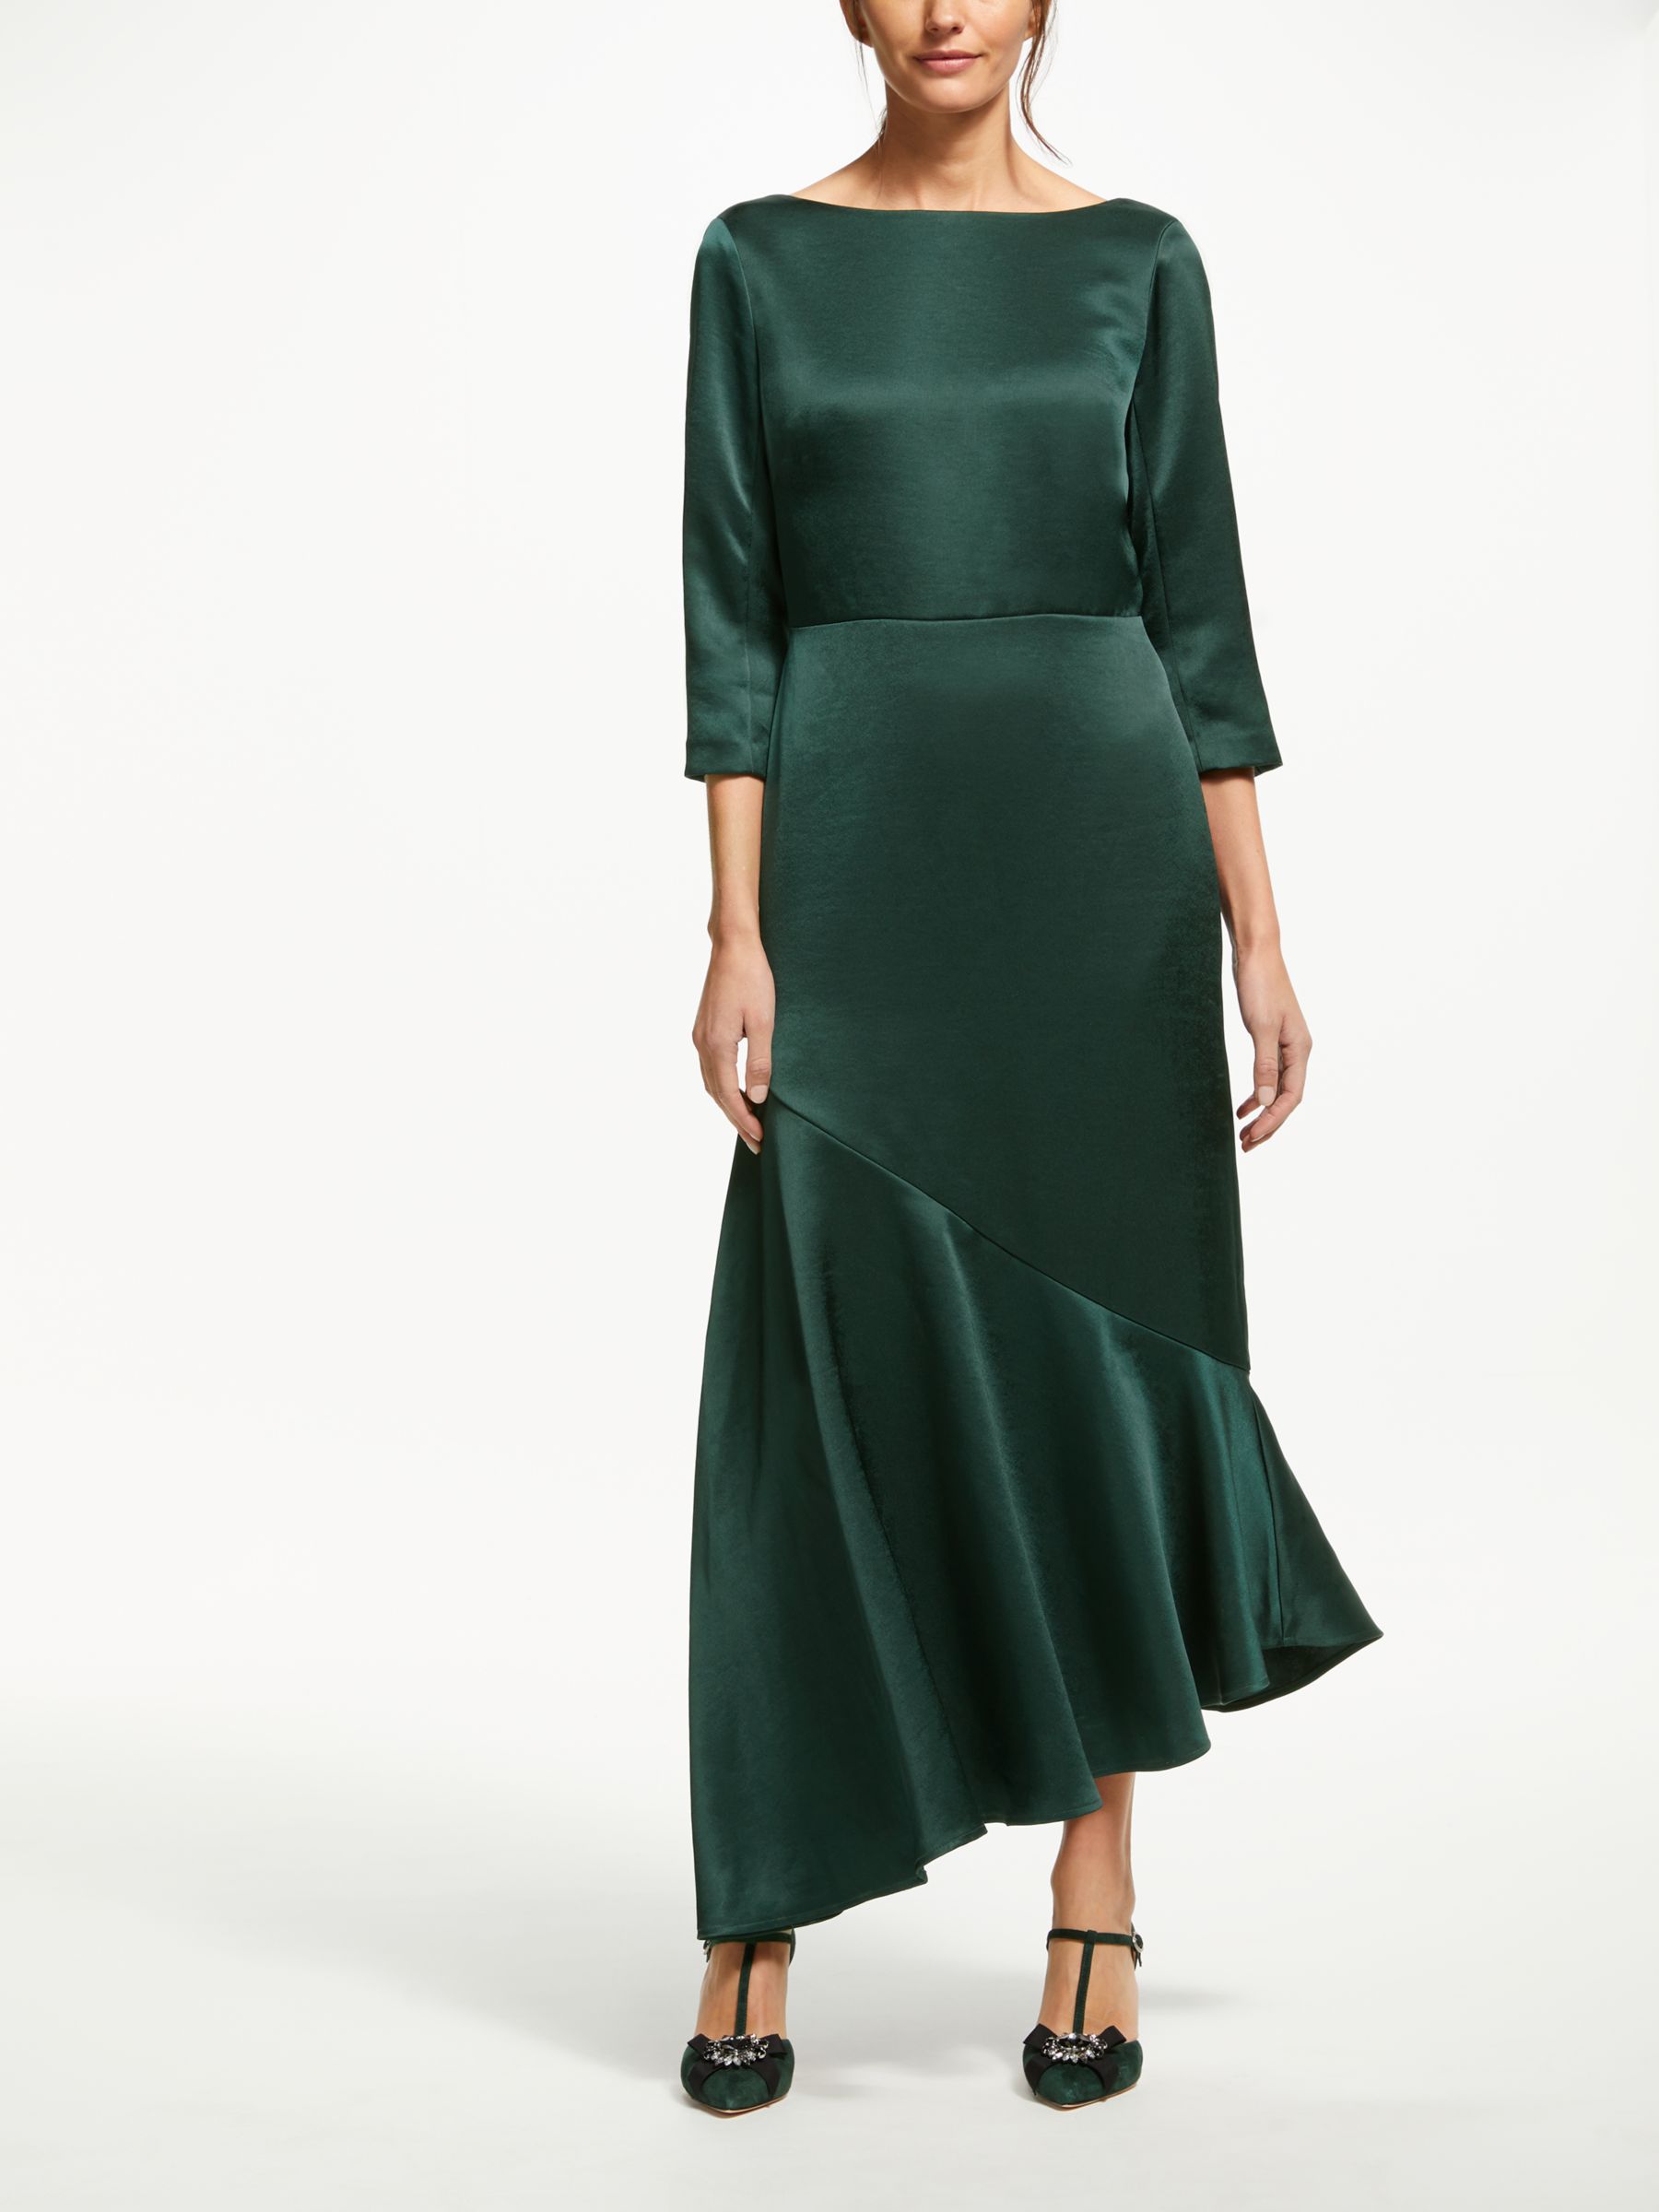 Boden Rebecca Satin Maxi Dress, Chatsworth Green at John Lewis & Partners